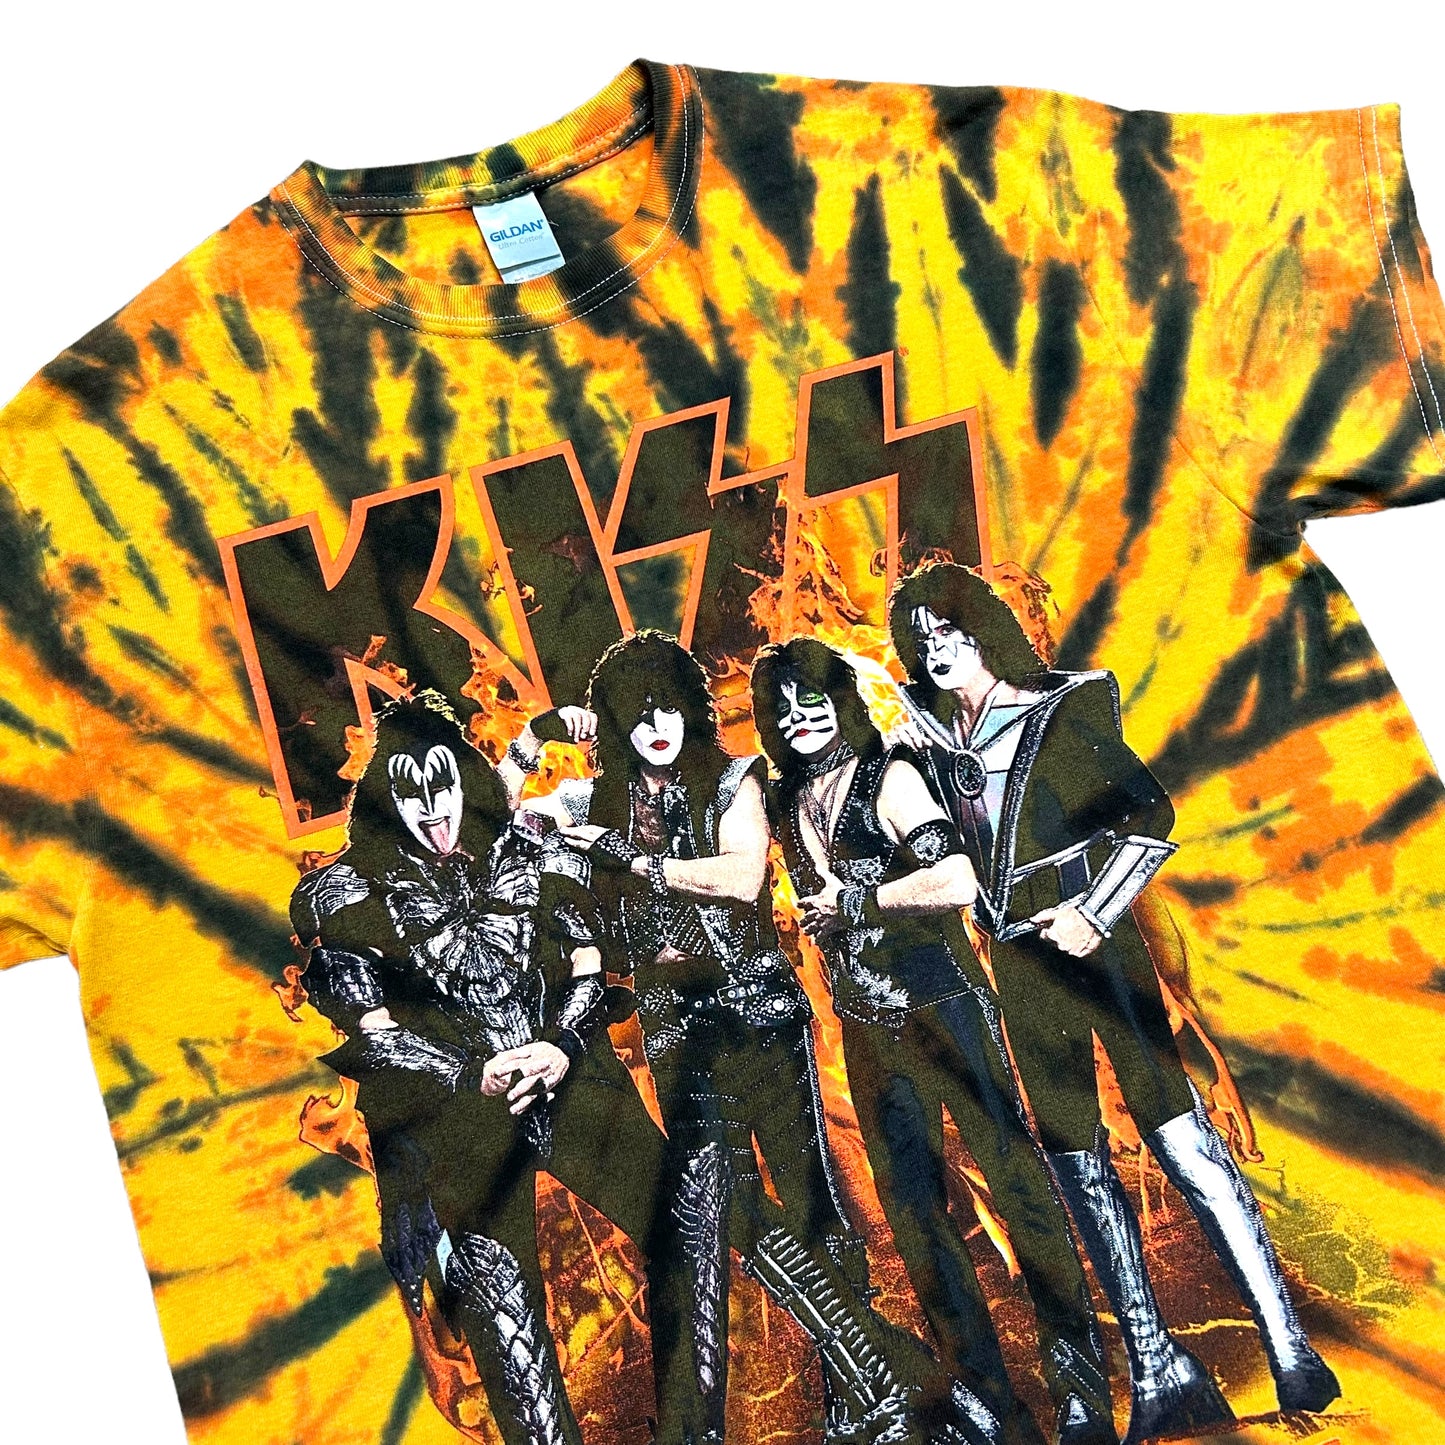 Modern KISS “End Of The Road Tour” Yellow/Orange Tie-Dye Graphic T-Shirt - Size Medium